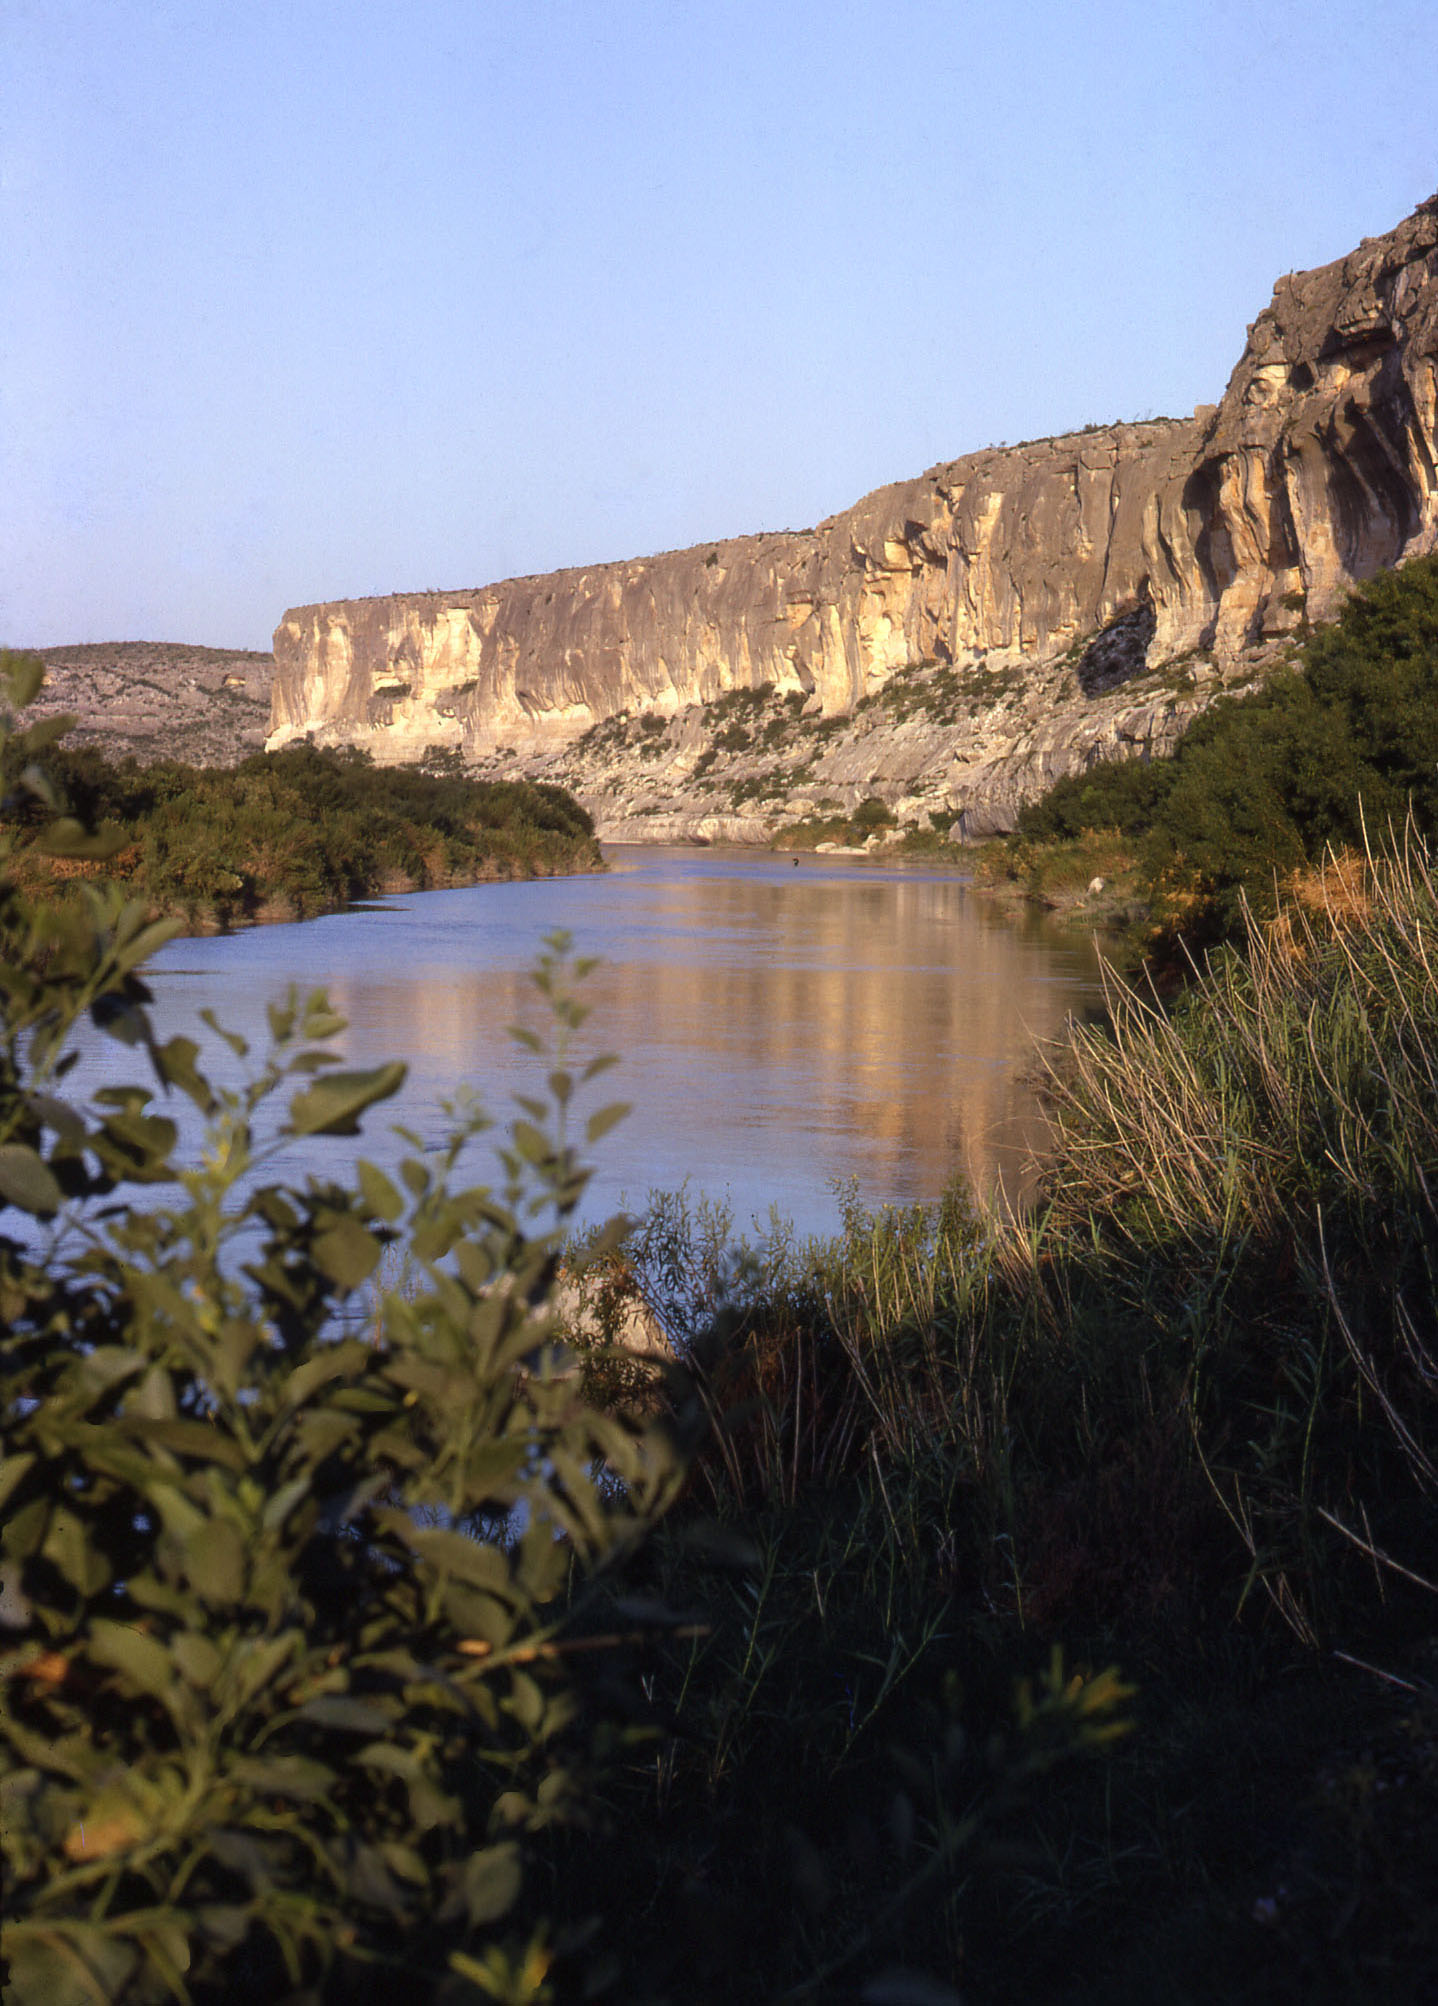 Pecos River at Pecos Texas - Upstream view